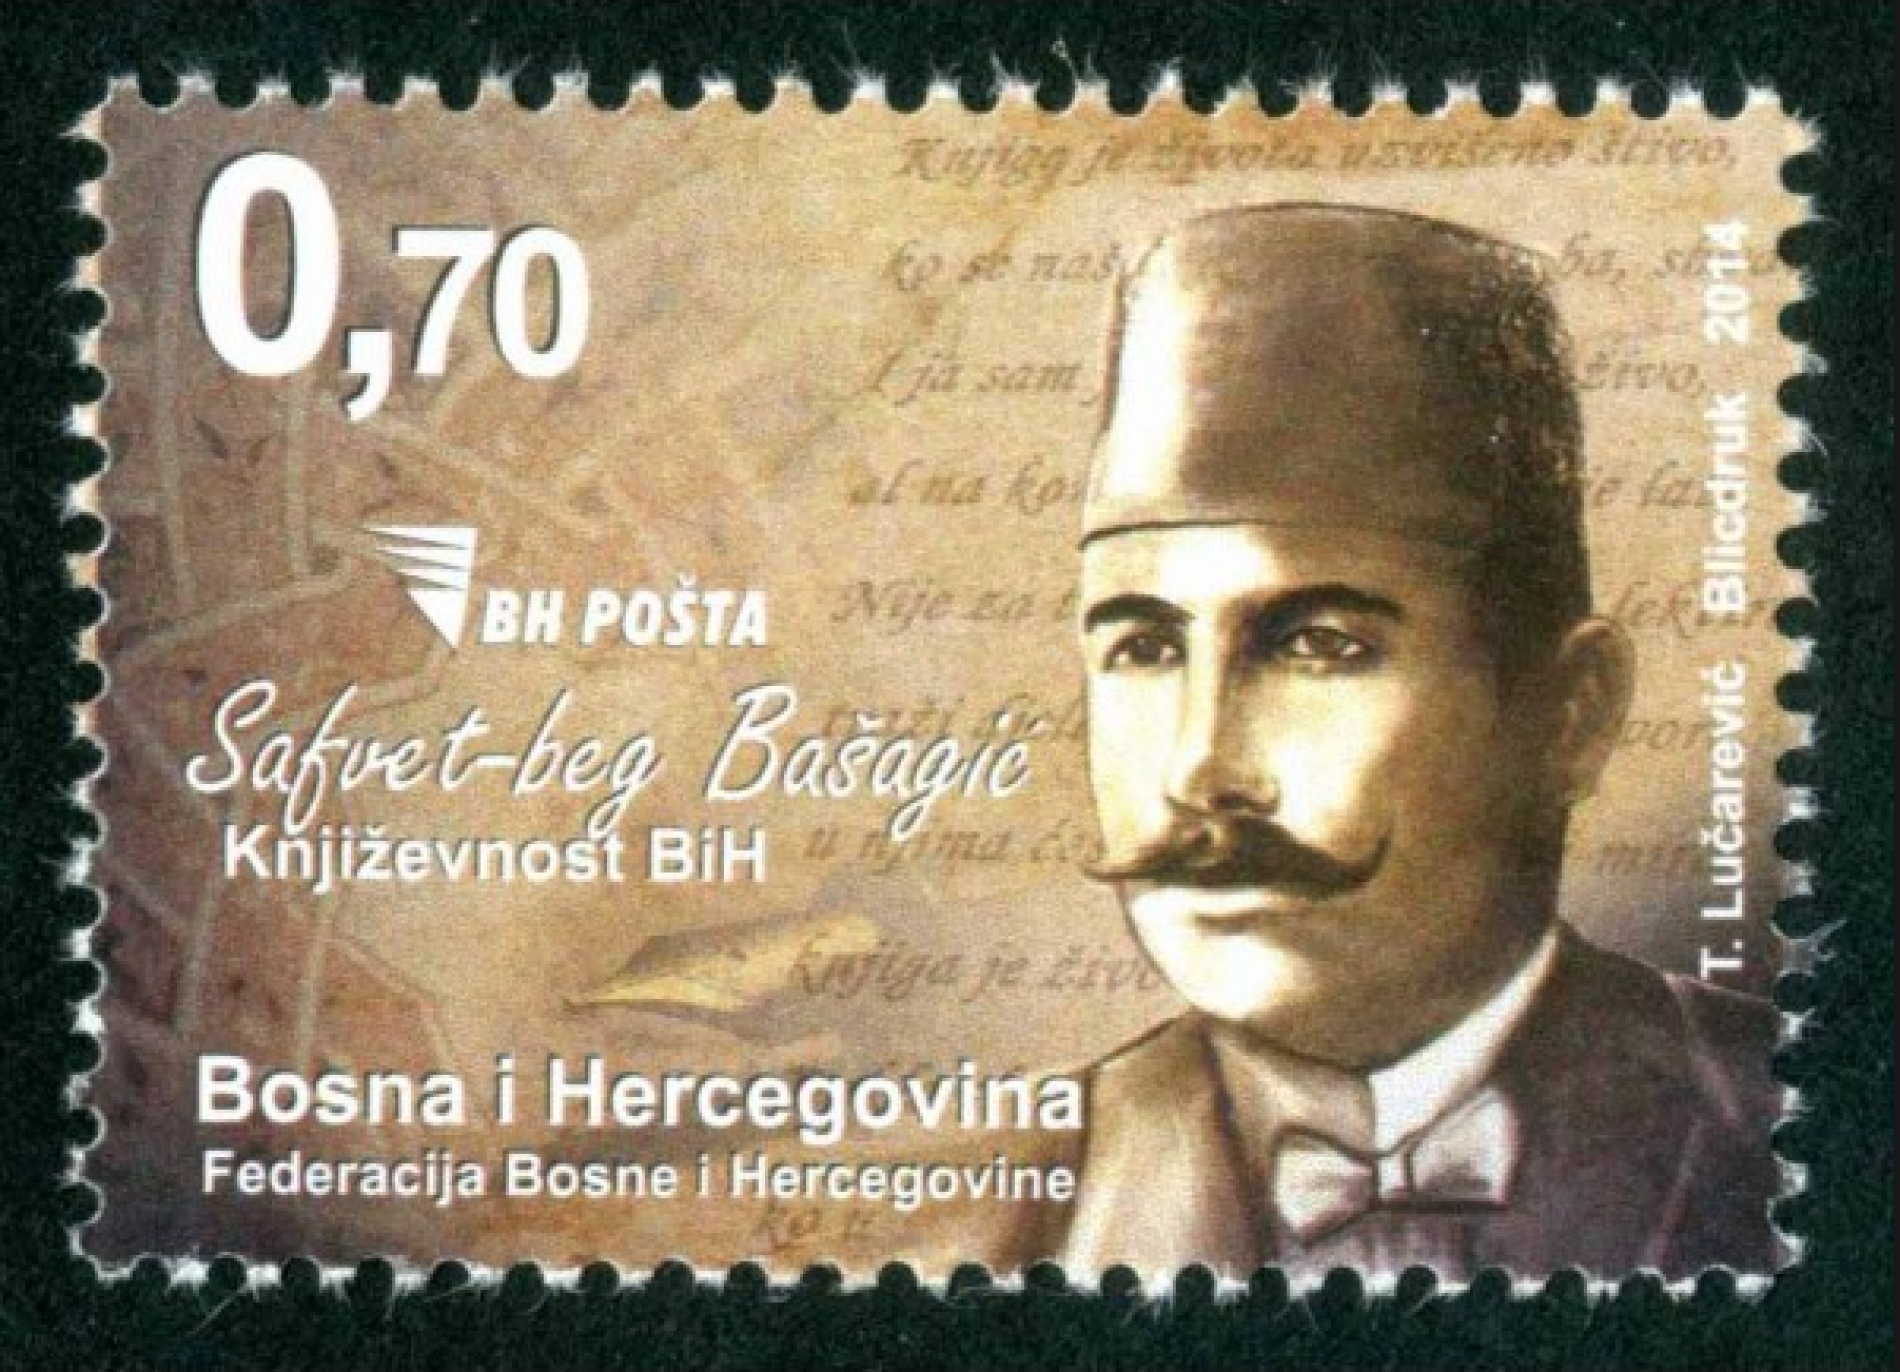 Godišnjica smrti: Dr Safvet-beg Bašagić – Jedan od najeminentnijih Bošnjaka svoga vremena